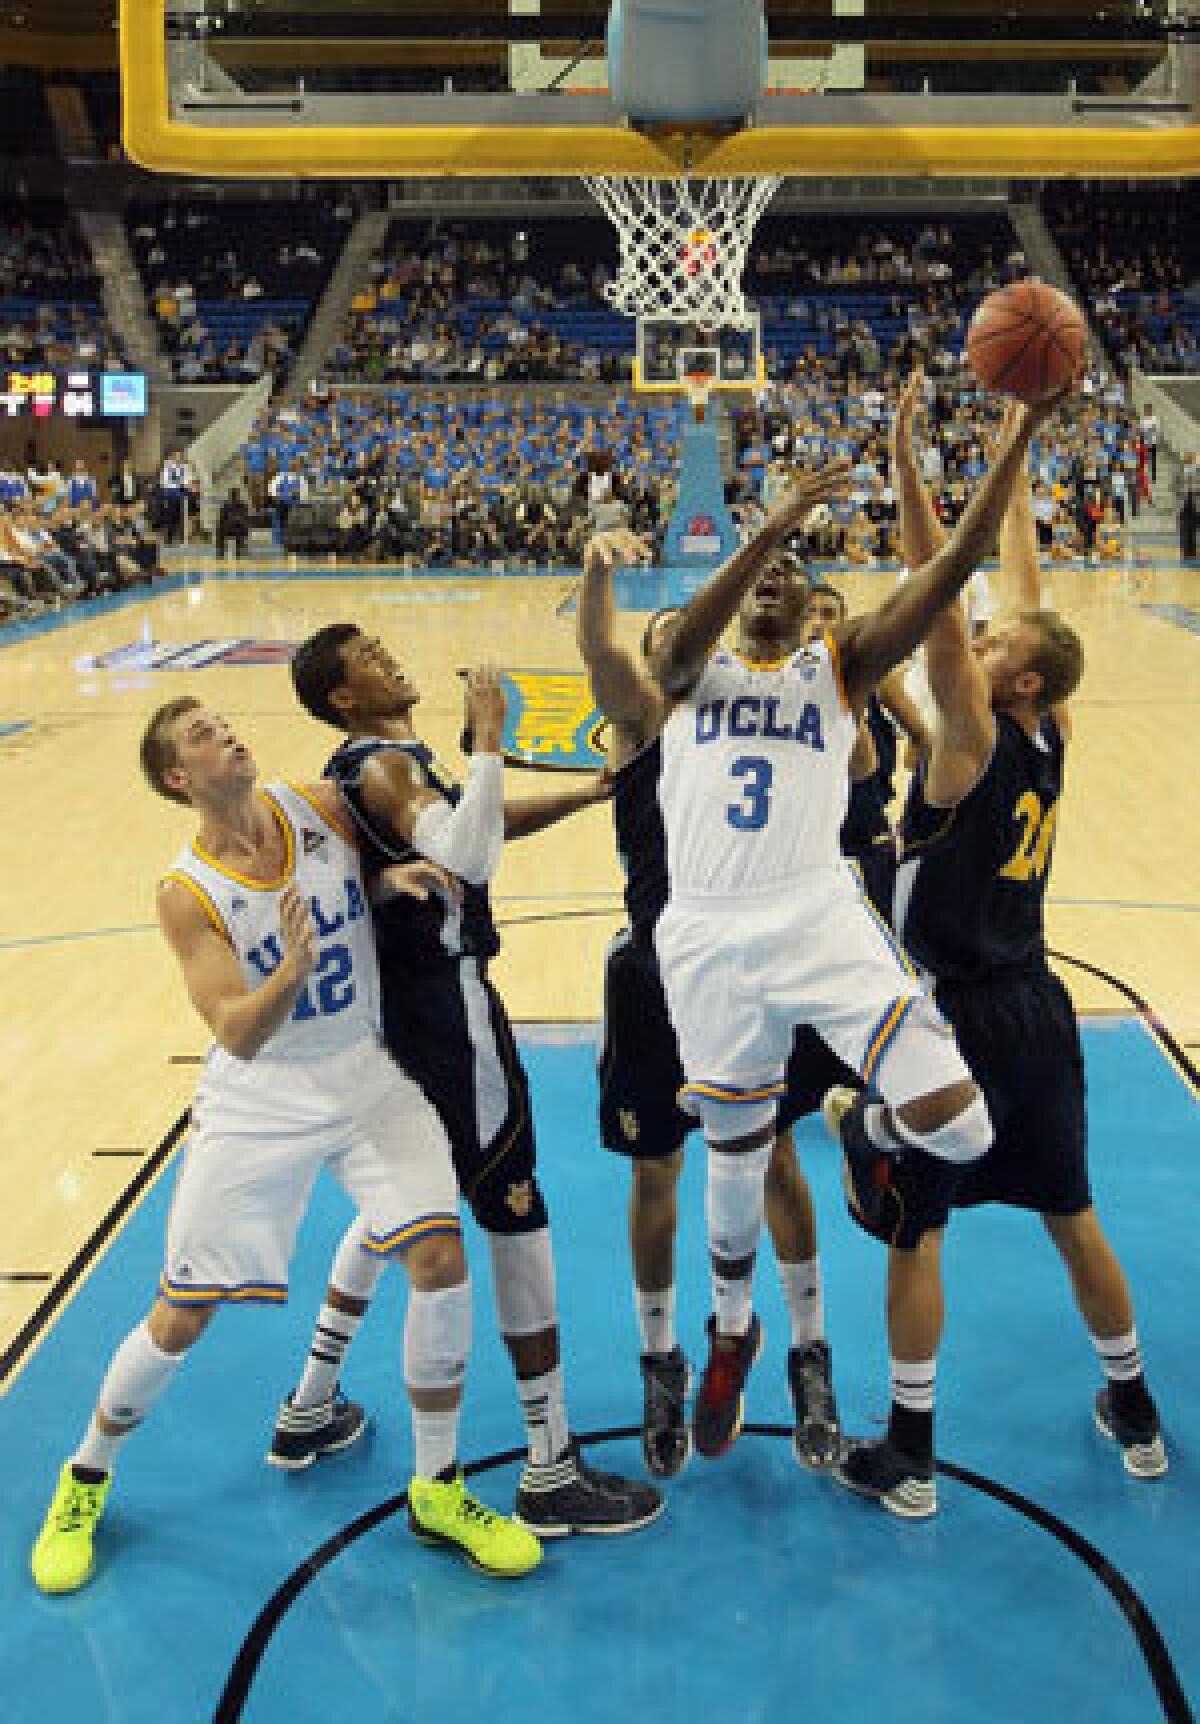 Jordan Adams of UCLA puts back a rebound against UC Irvine.